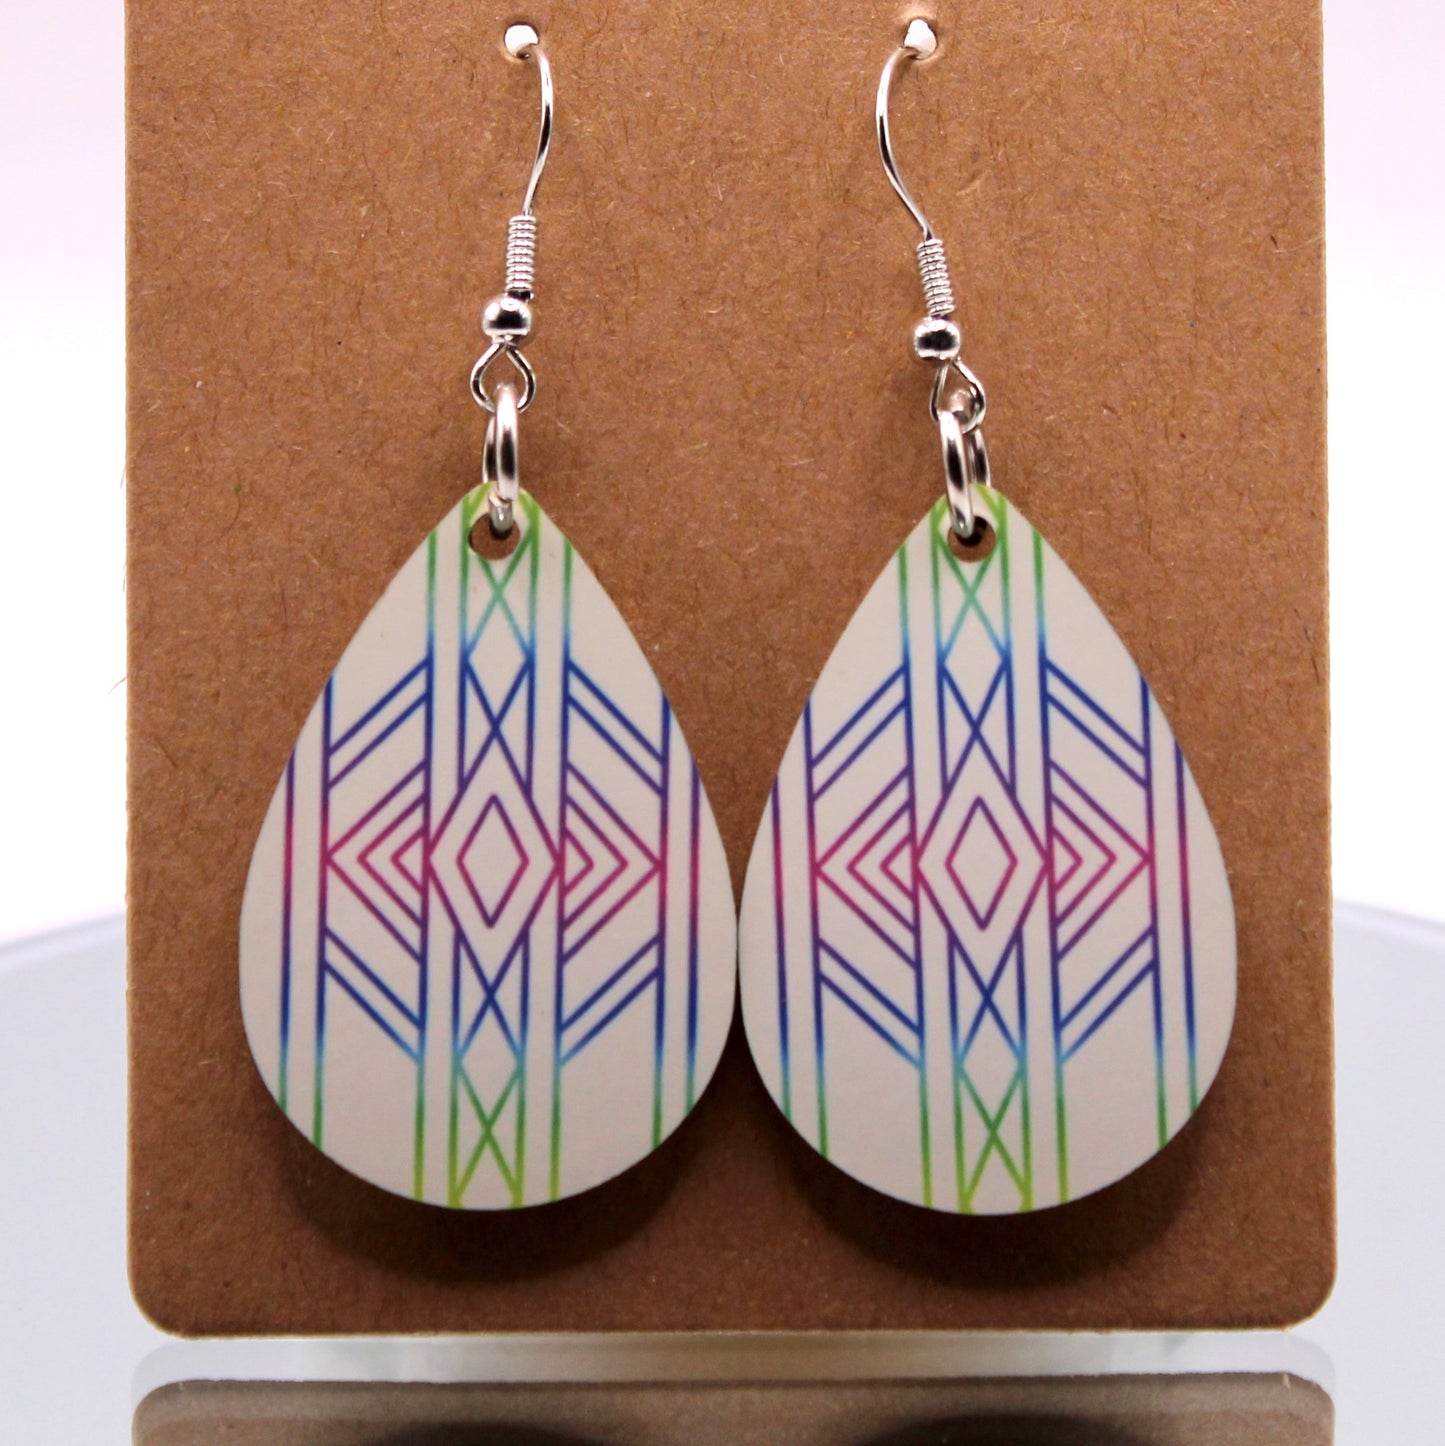 Symmetrical Design - Printed Earrings